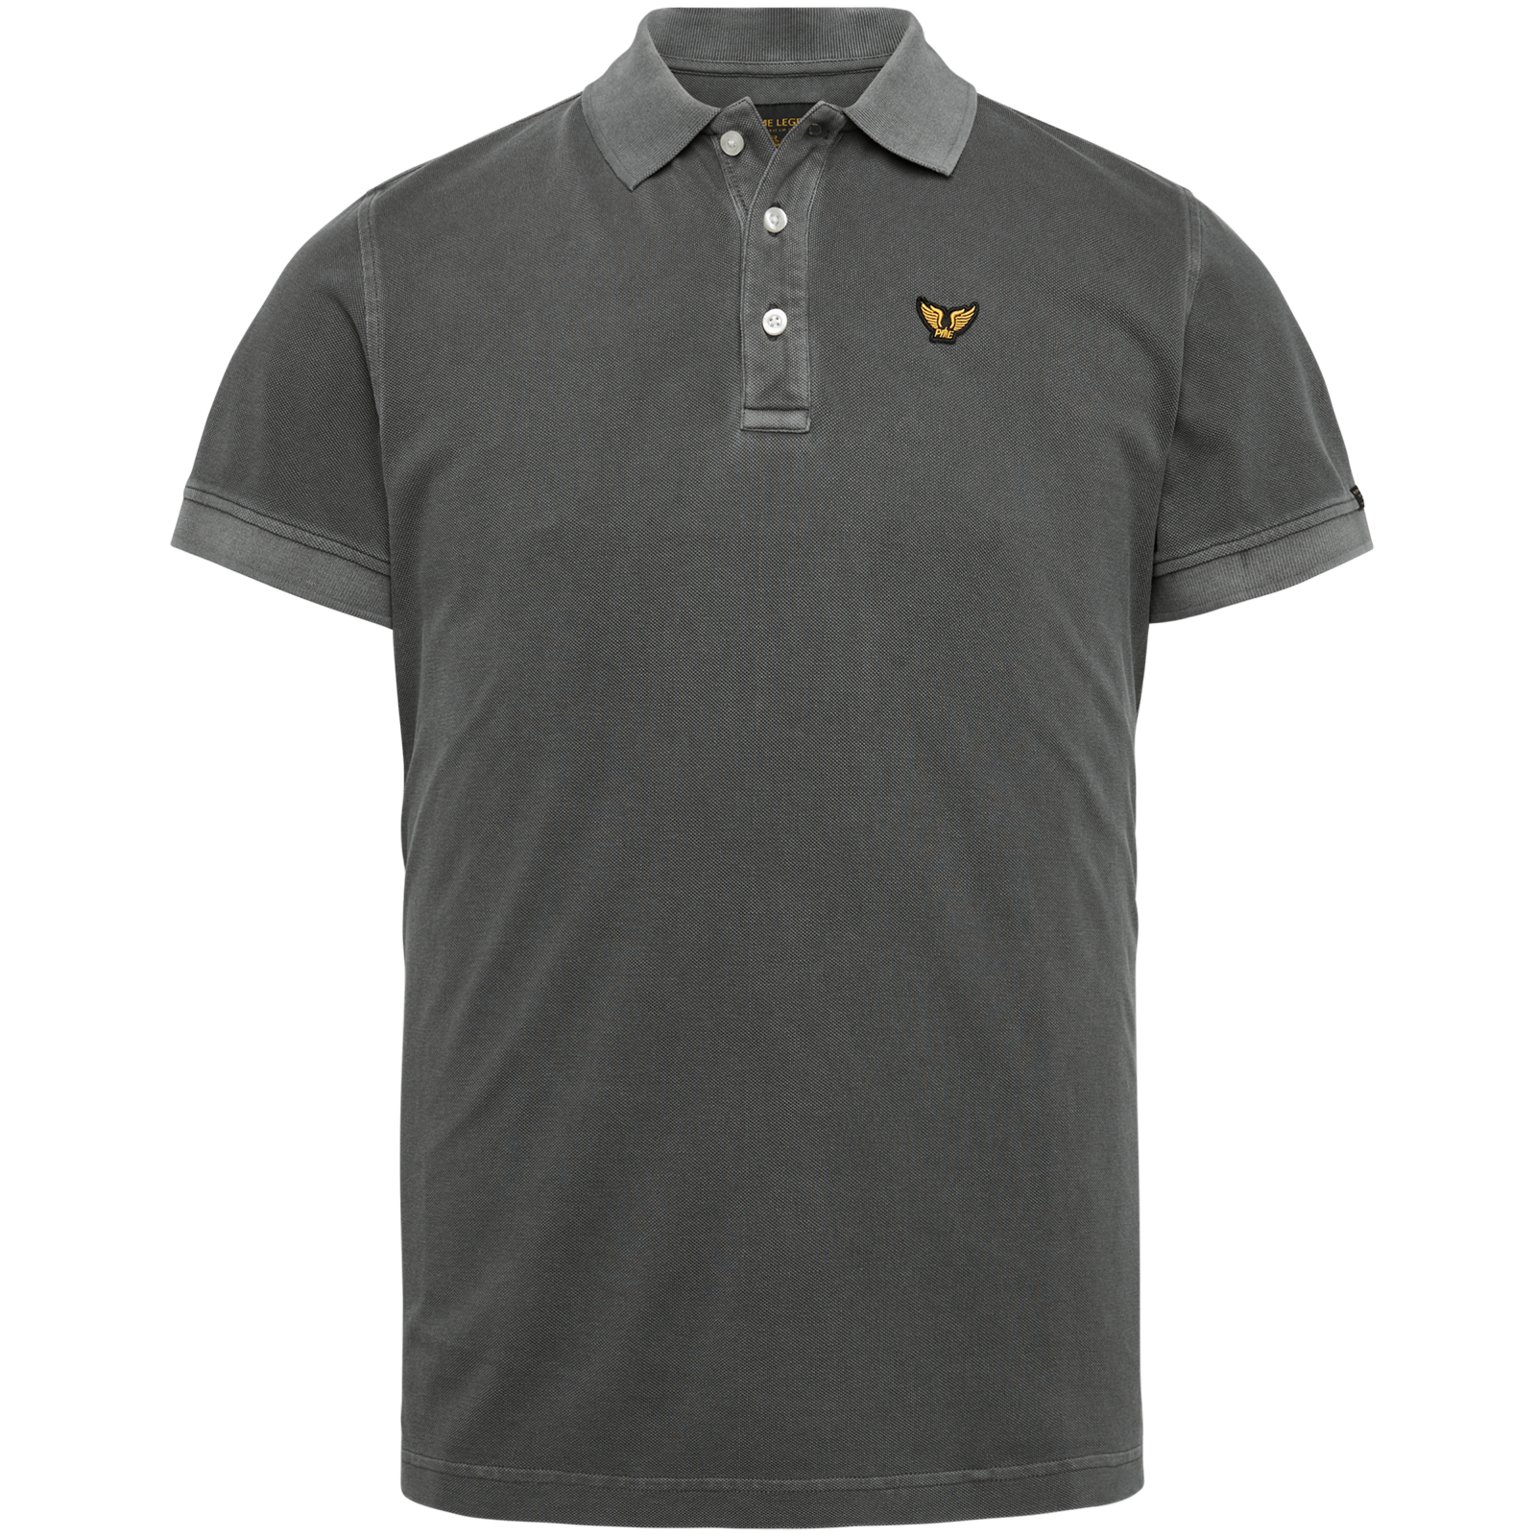 PME Legend Poloshirt short sleeve garment dyed pique asphalt